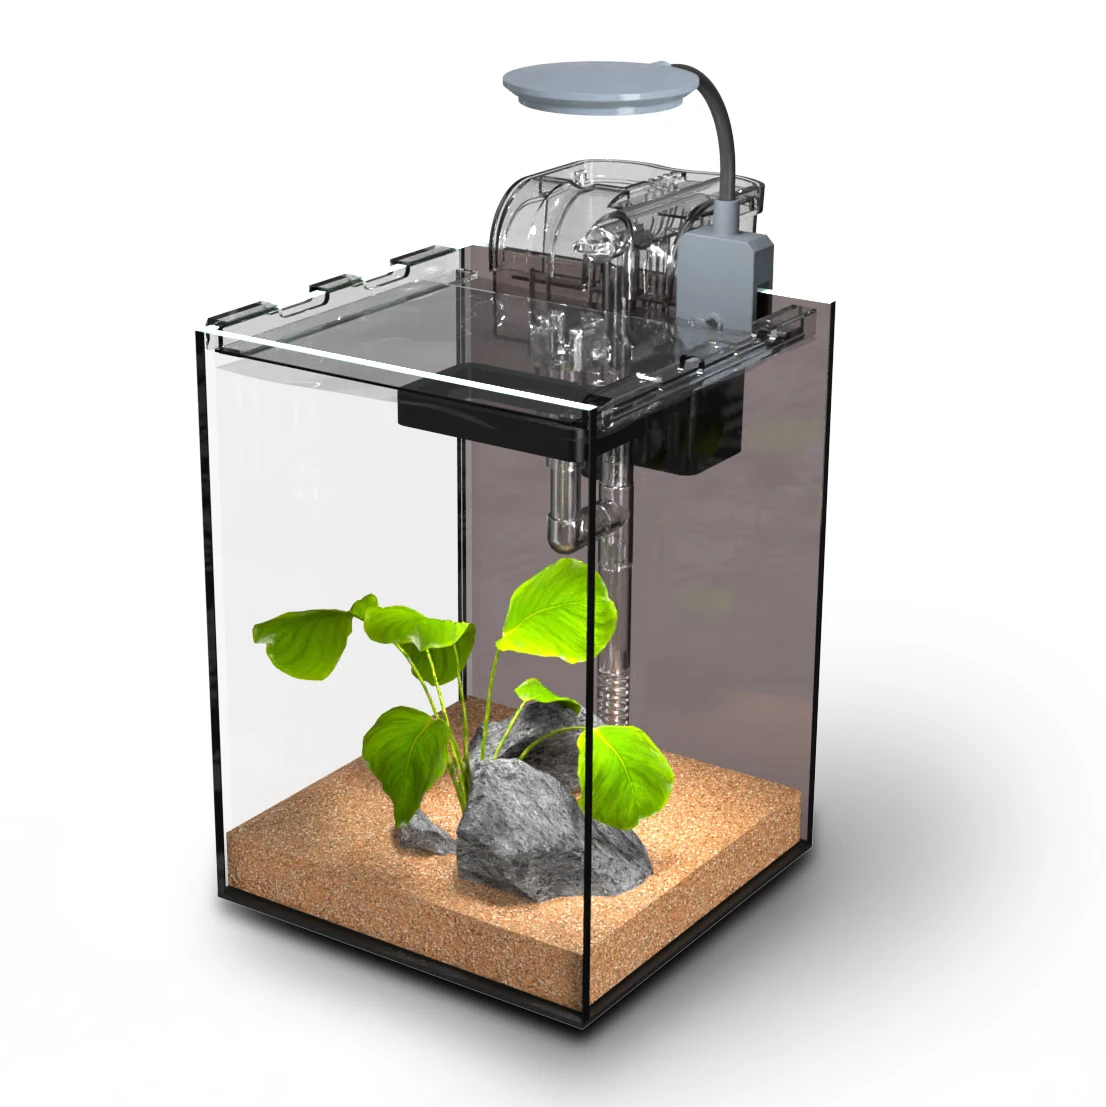 

Mini Fish Tank Small Square Tank Glass Water-free Internet Celebrity Landscaping Ecological Creative Home Desktop Fish Tank